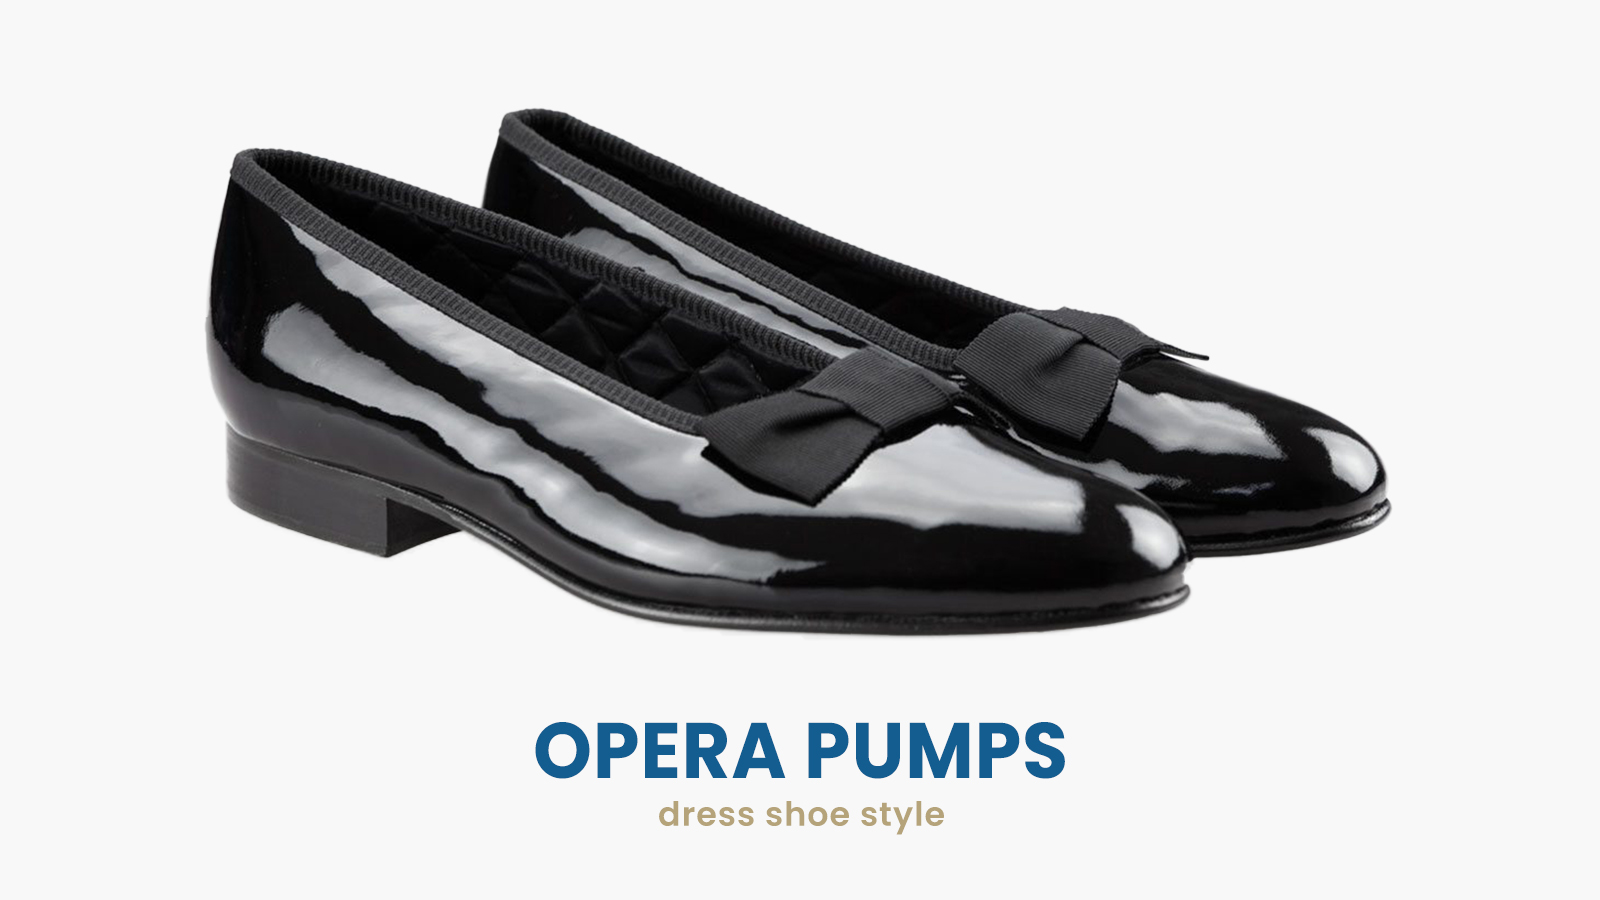 opera pumps dress shoes style